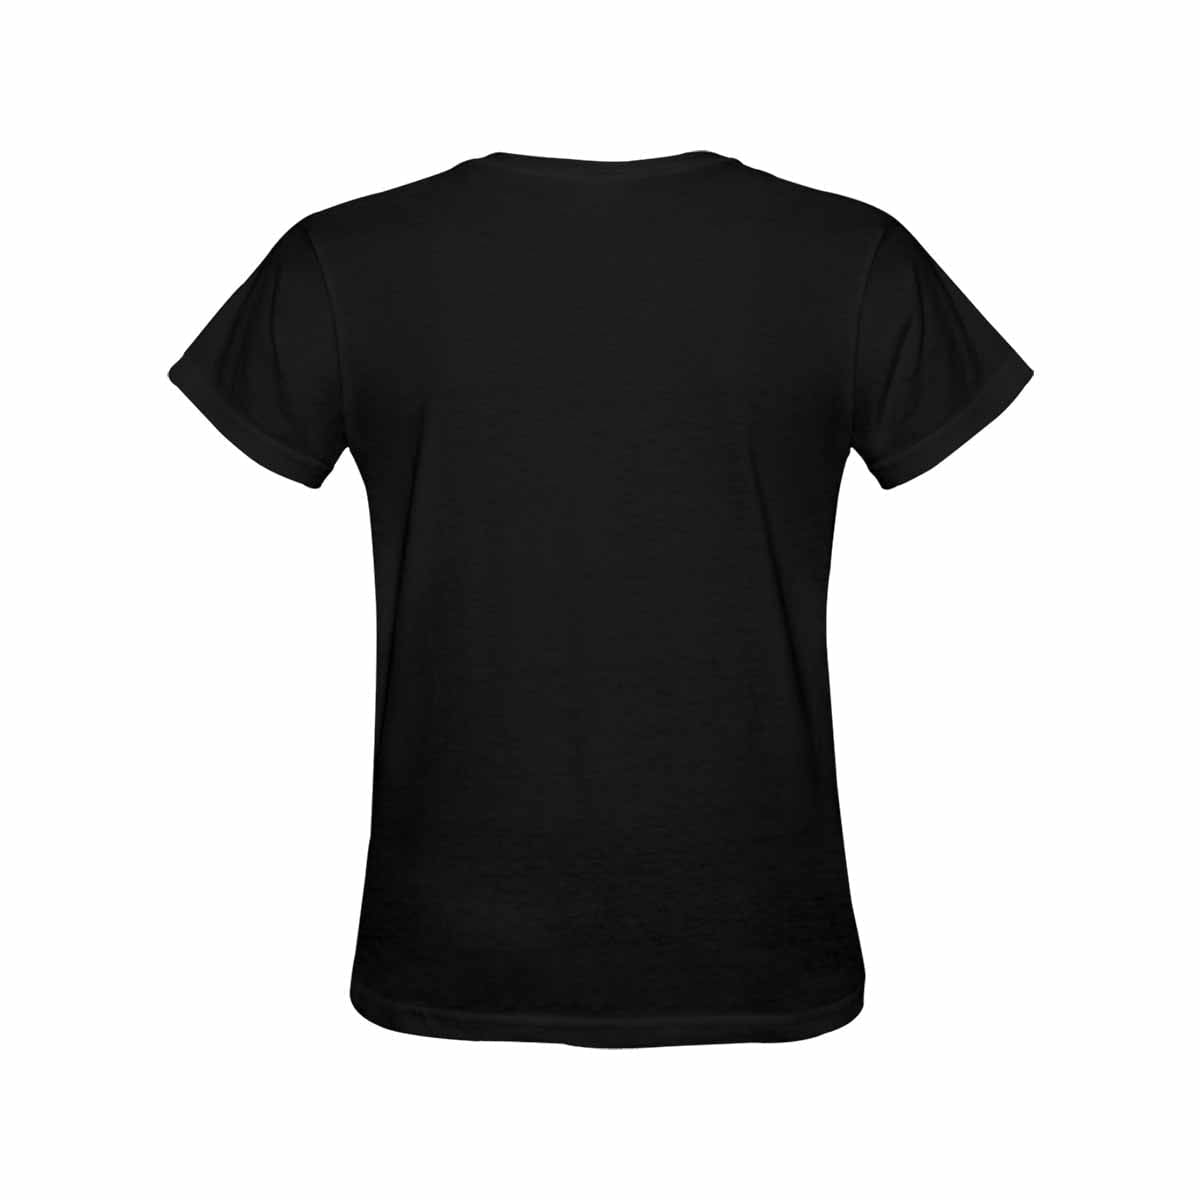 Womens T-shirt, James 5:16  - Black Graphic Tee-3